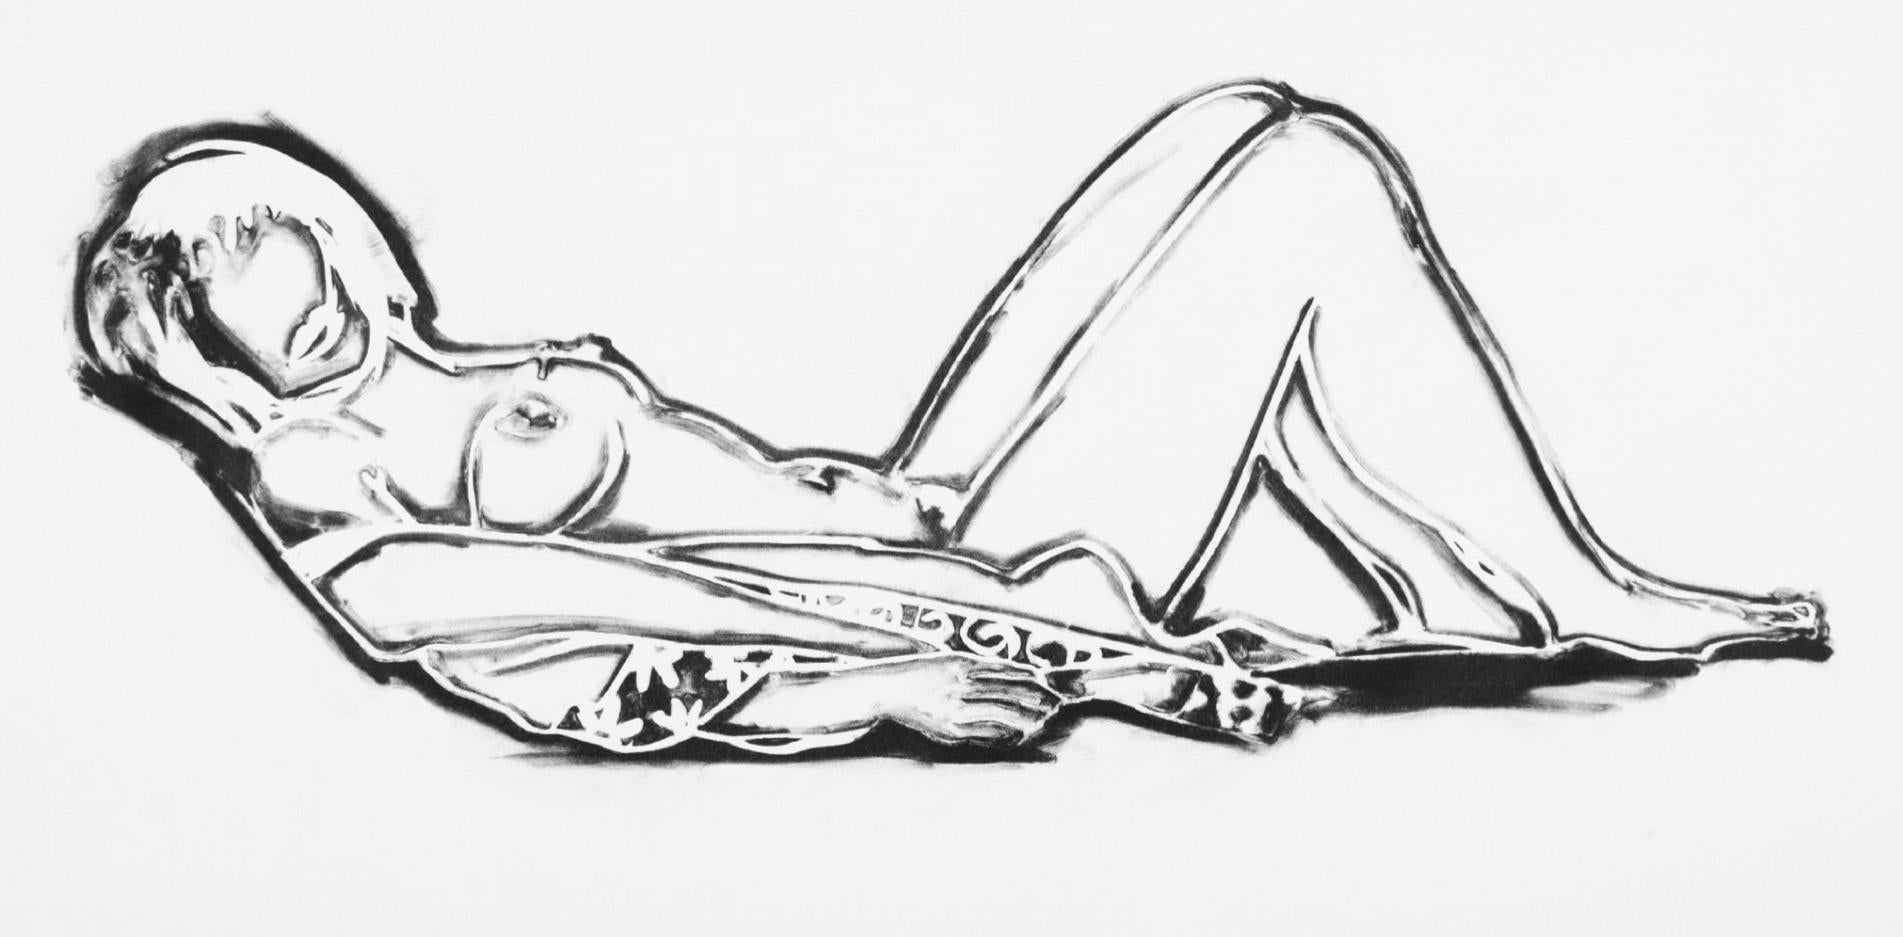 Tom Wesselmann Nude Print - MONICA LYING DOWN ON ROBE